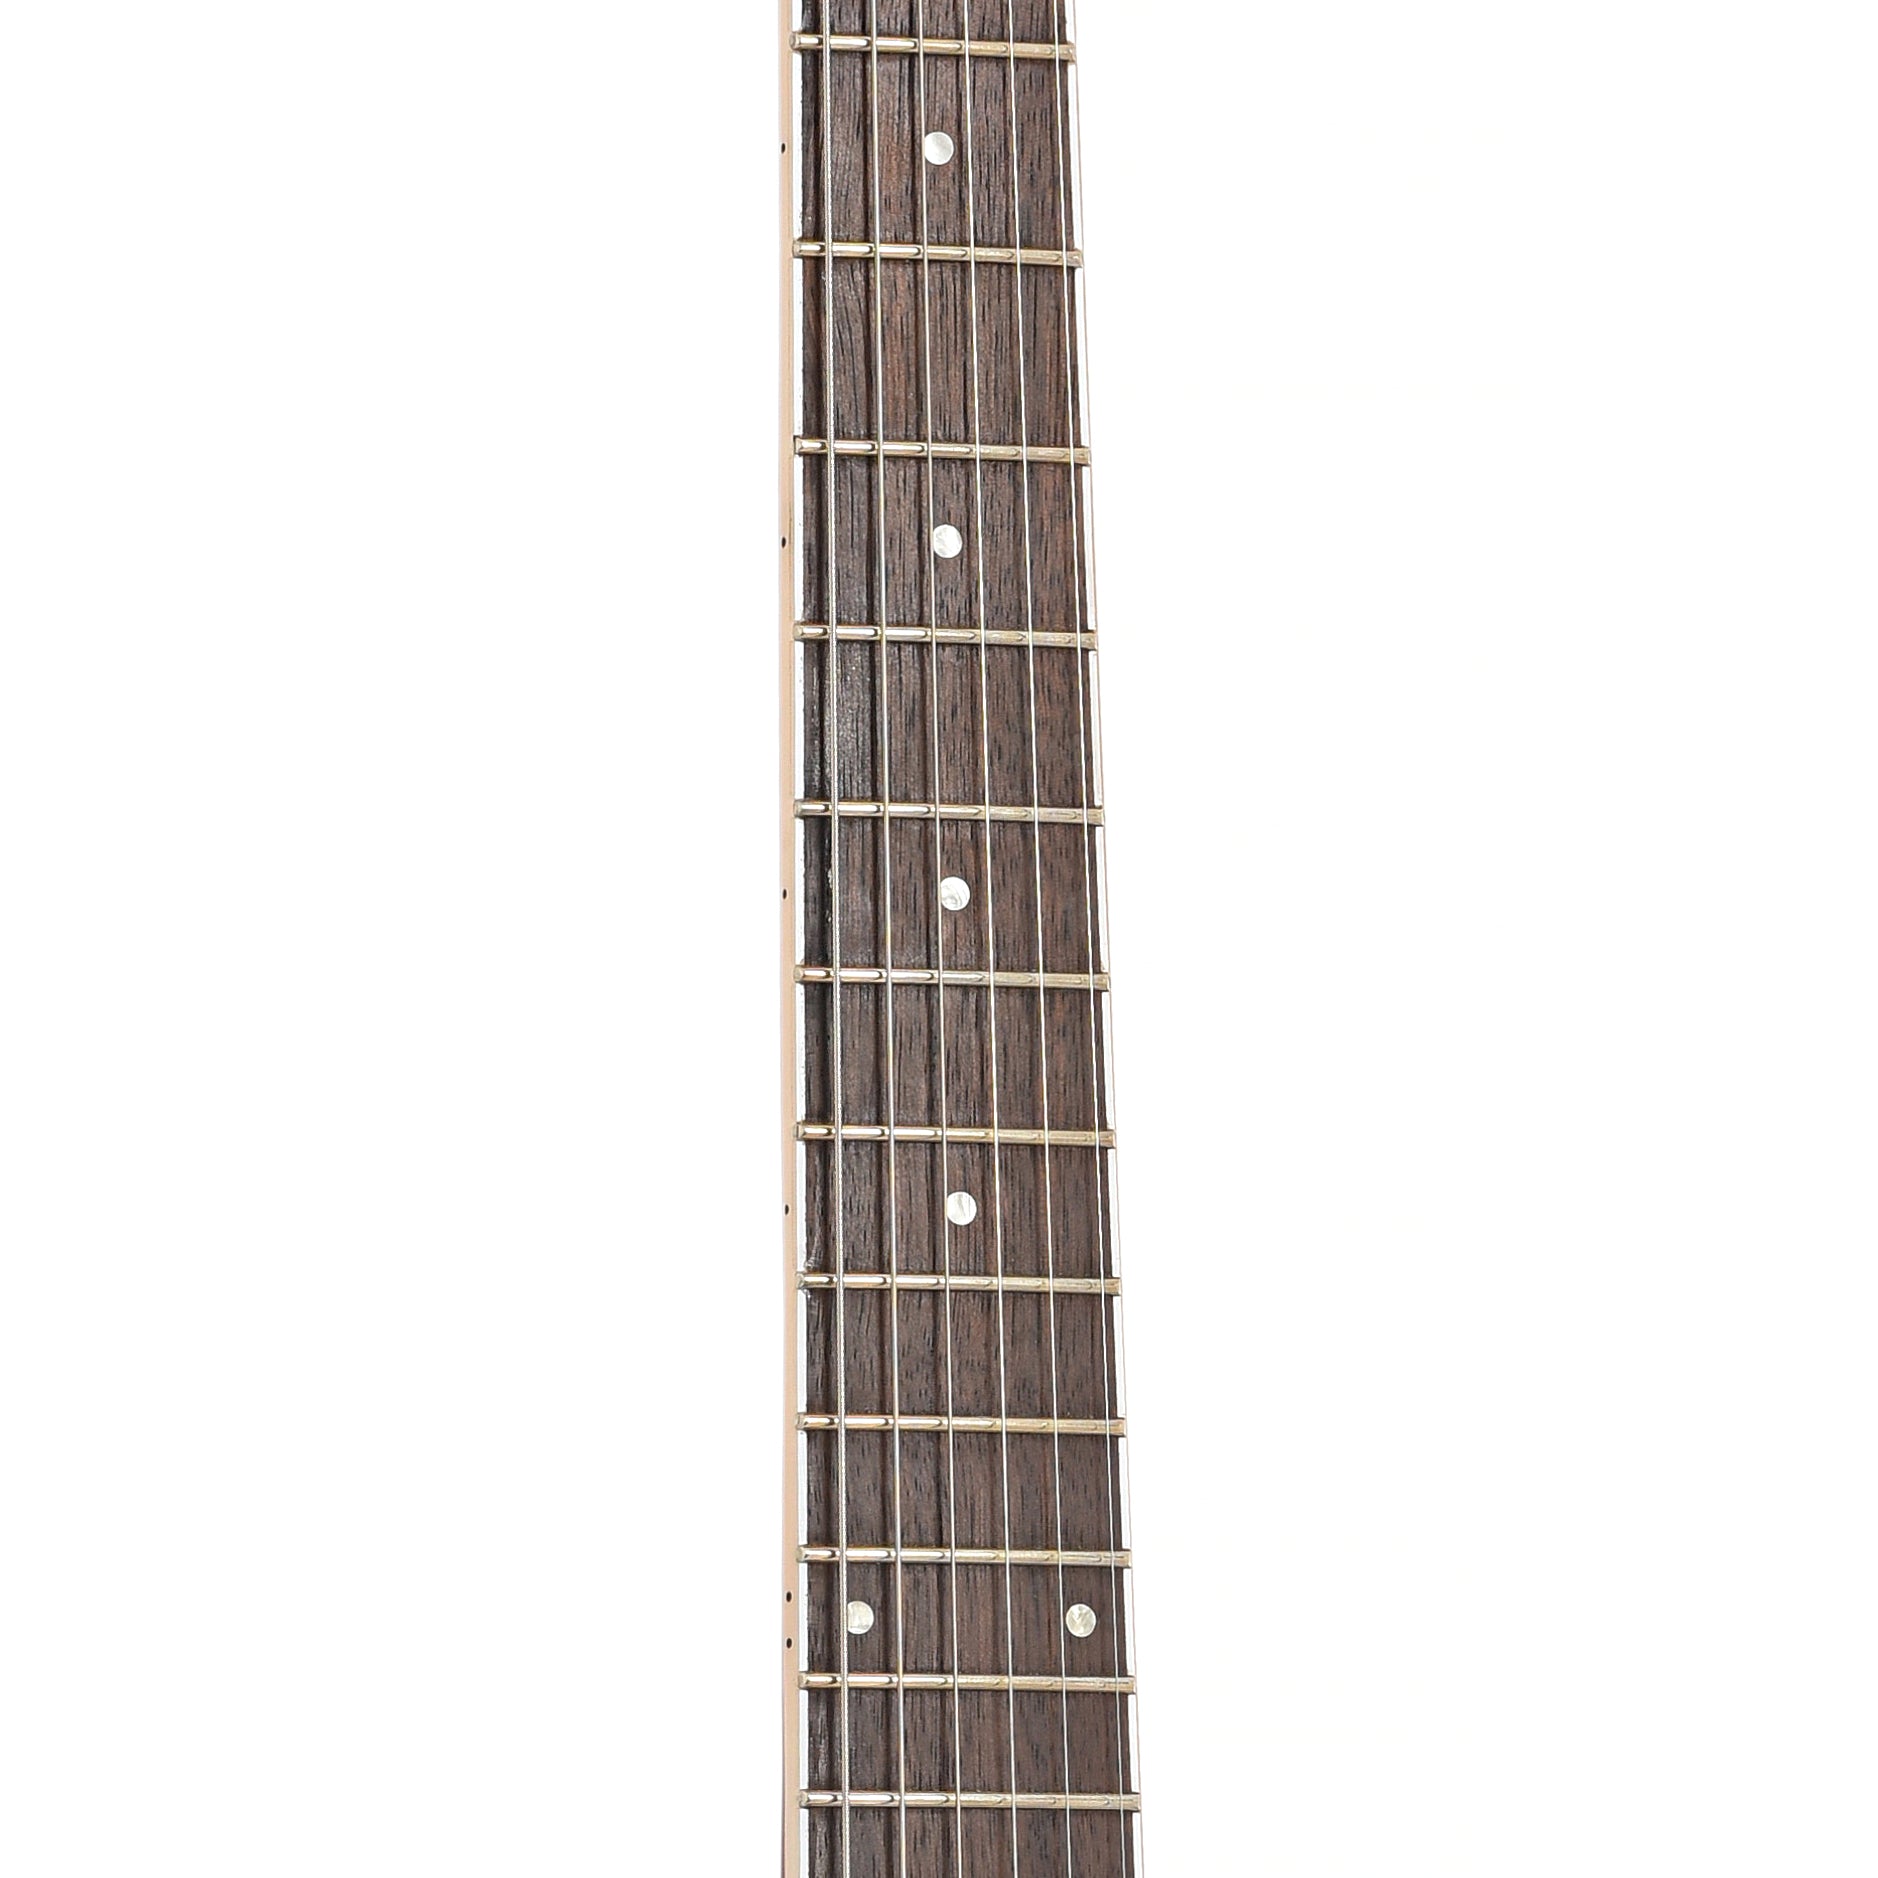 Fretboard of Guild Starfire I Double Cutaway Semi-Hollow Body Guitar with GVT, California Burst